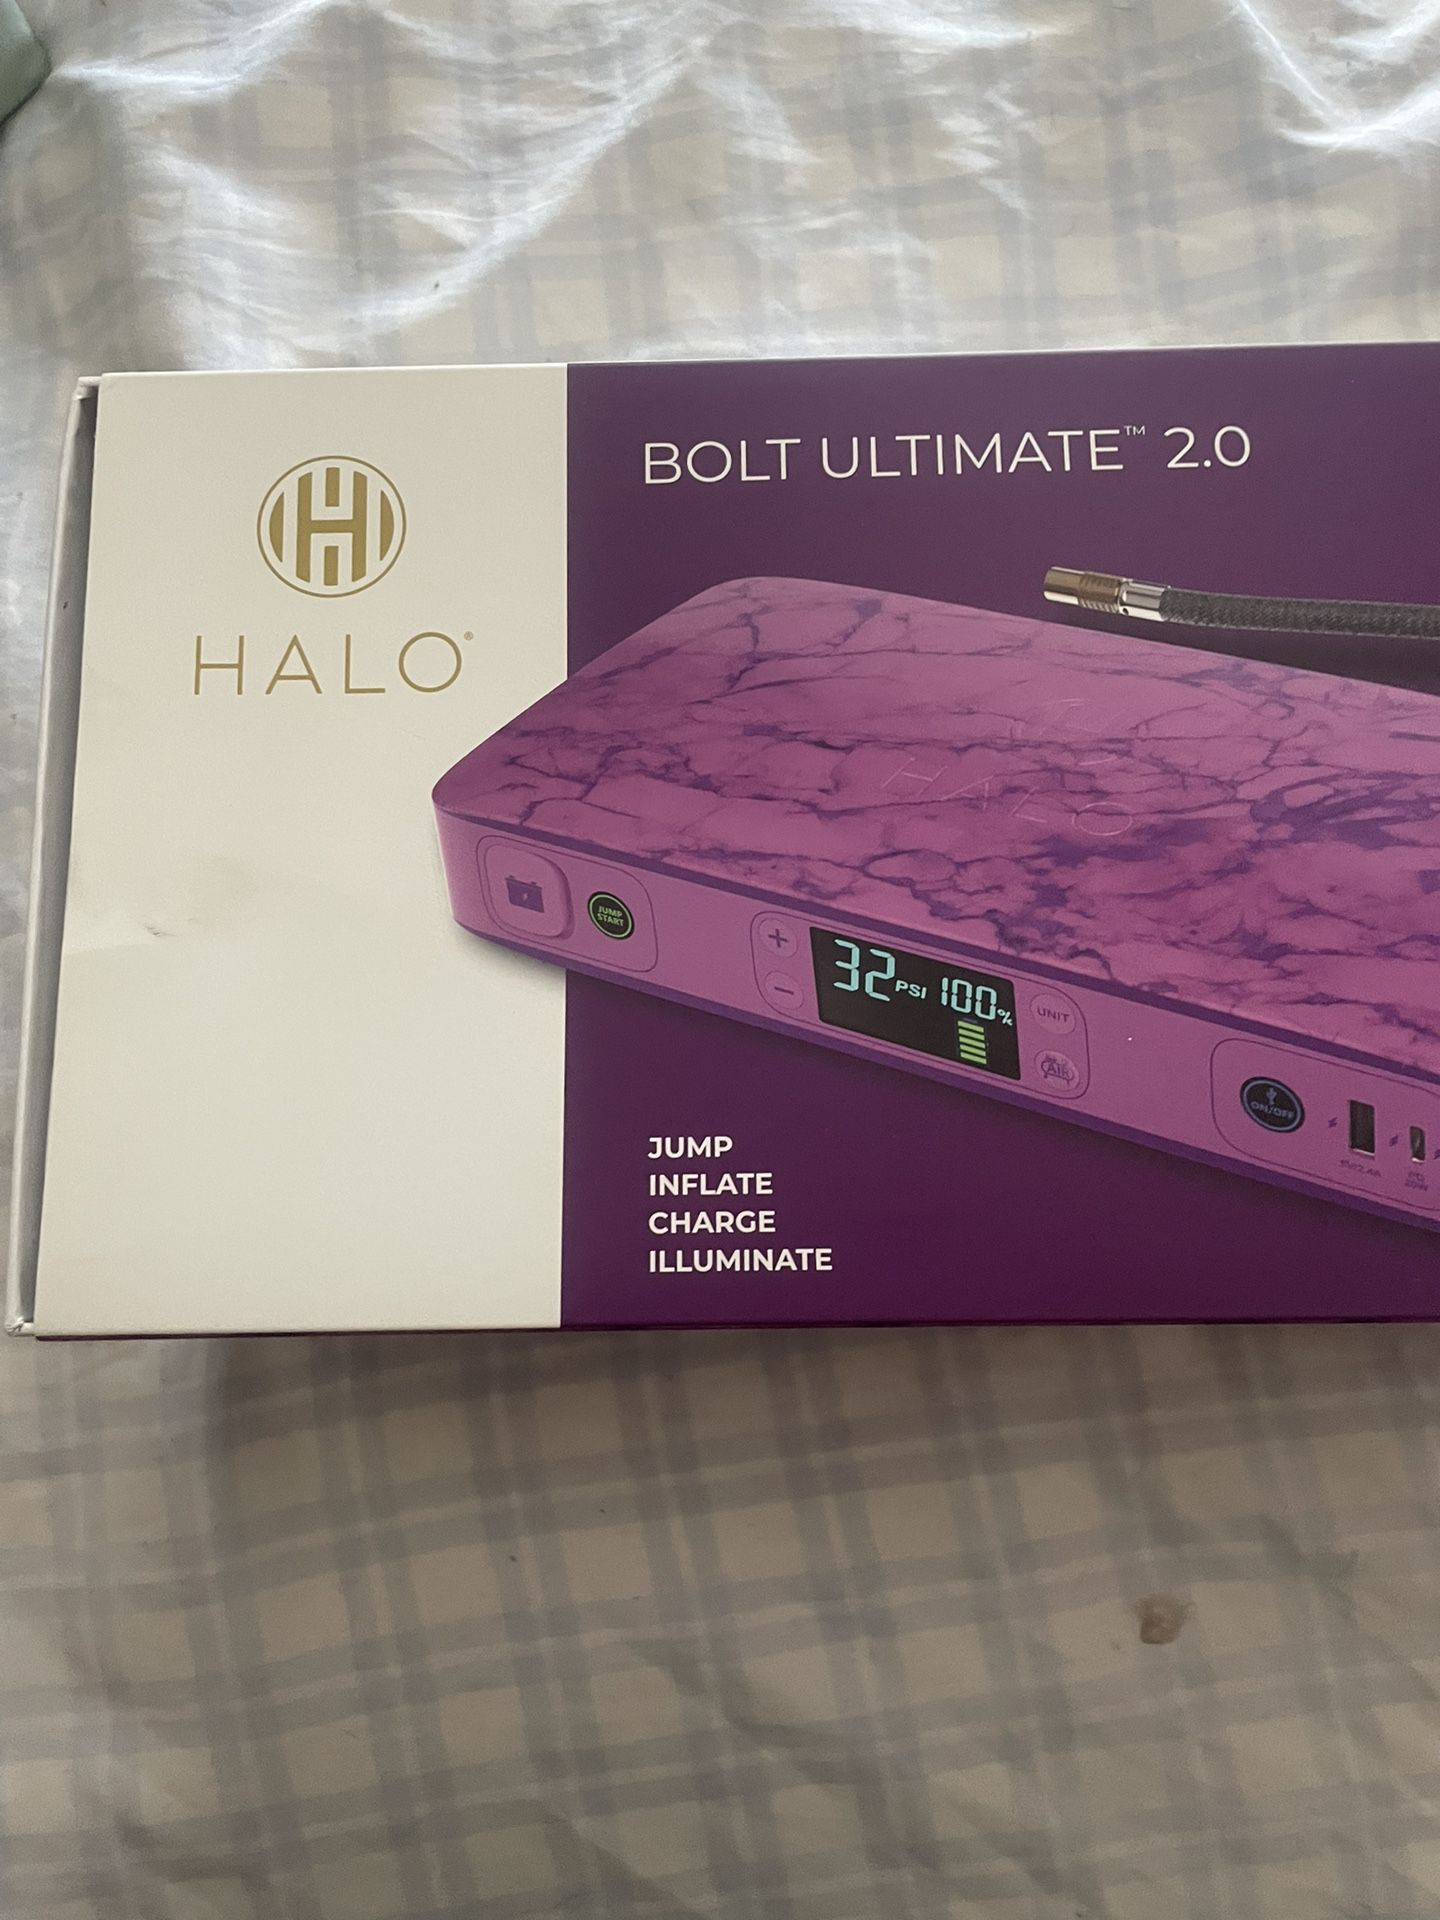 Halo Bolt Ultimate 2.0